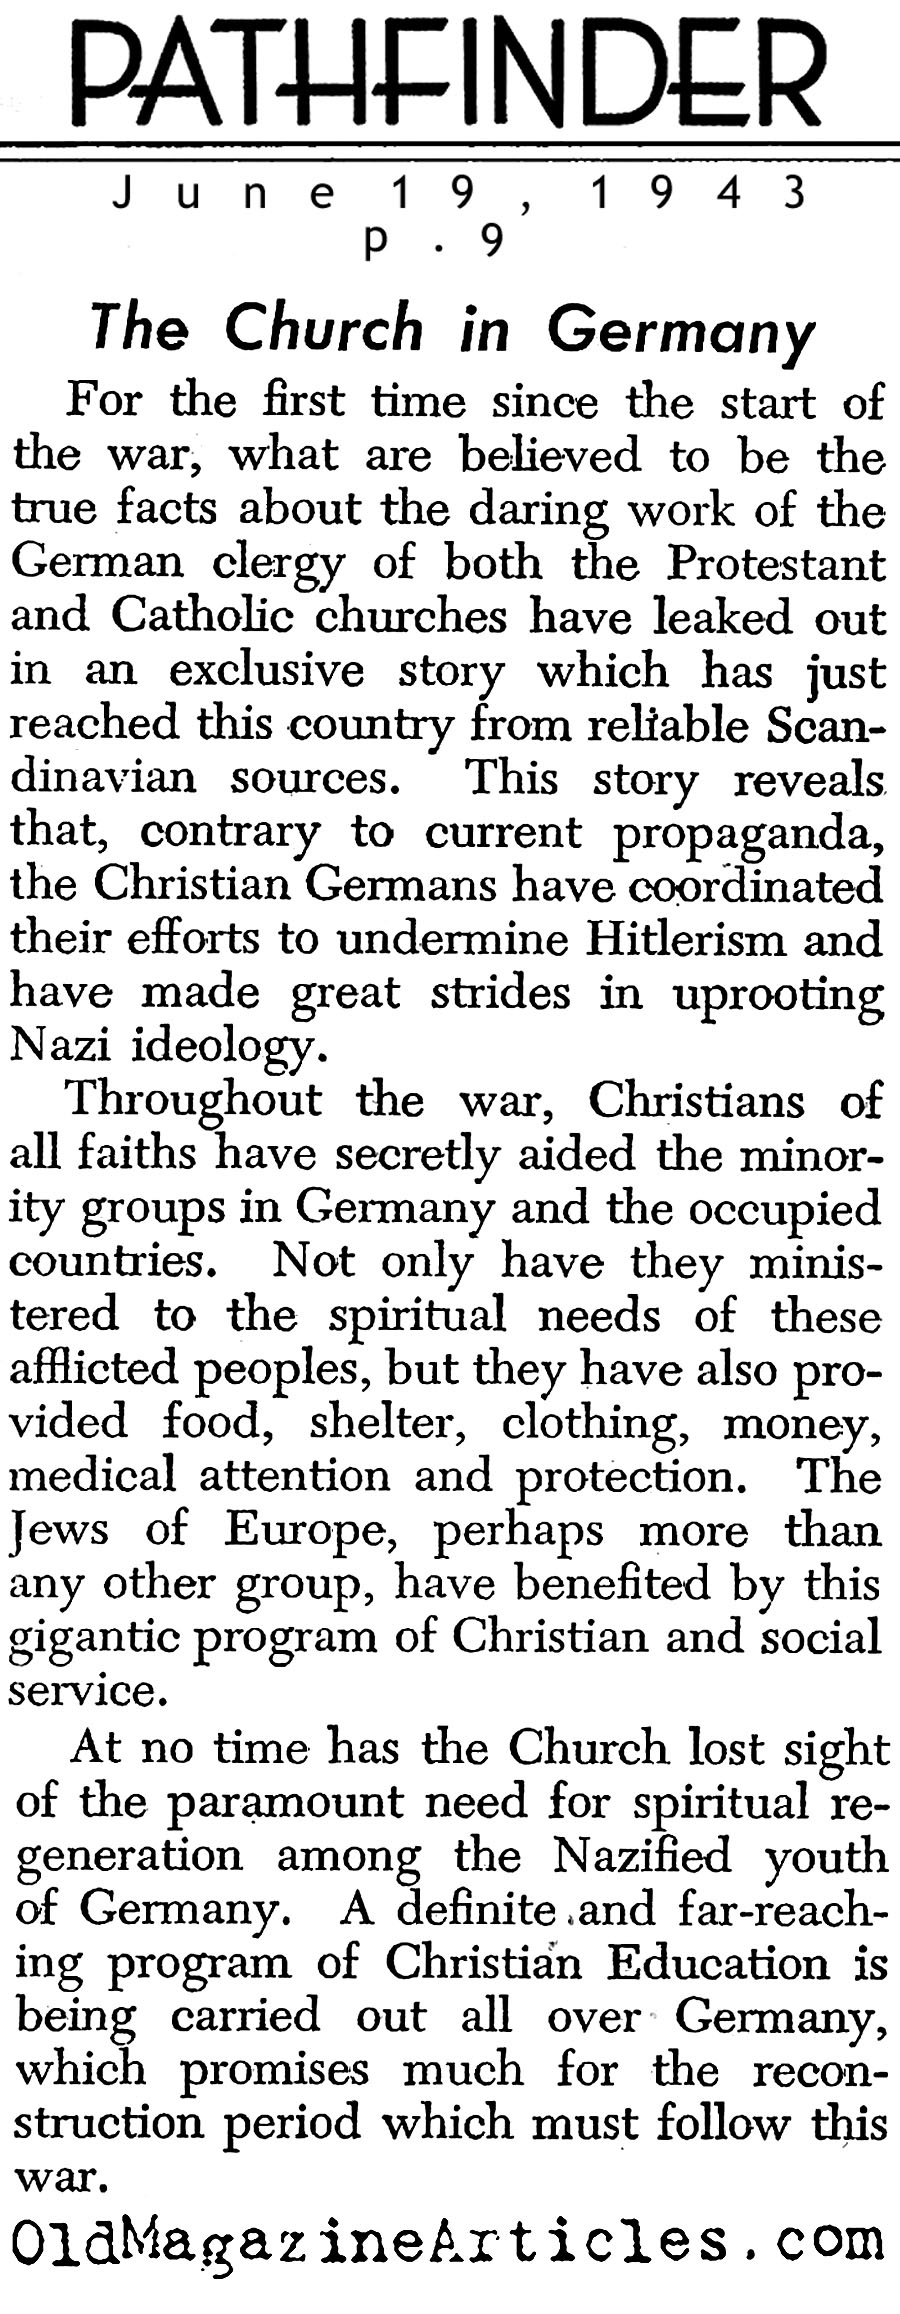 The Holocaust Rescuers (Pathfinder Magazine, 1943)